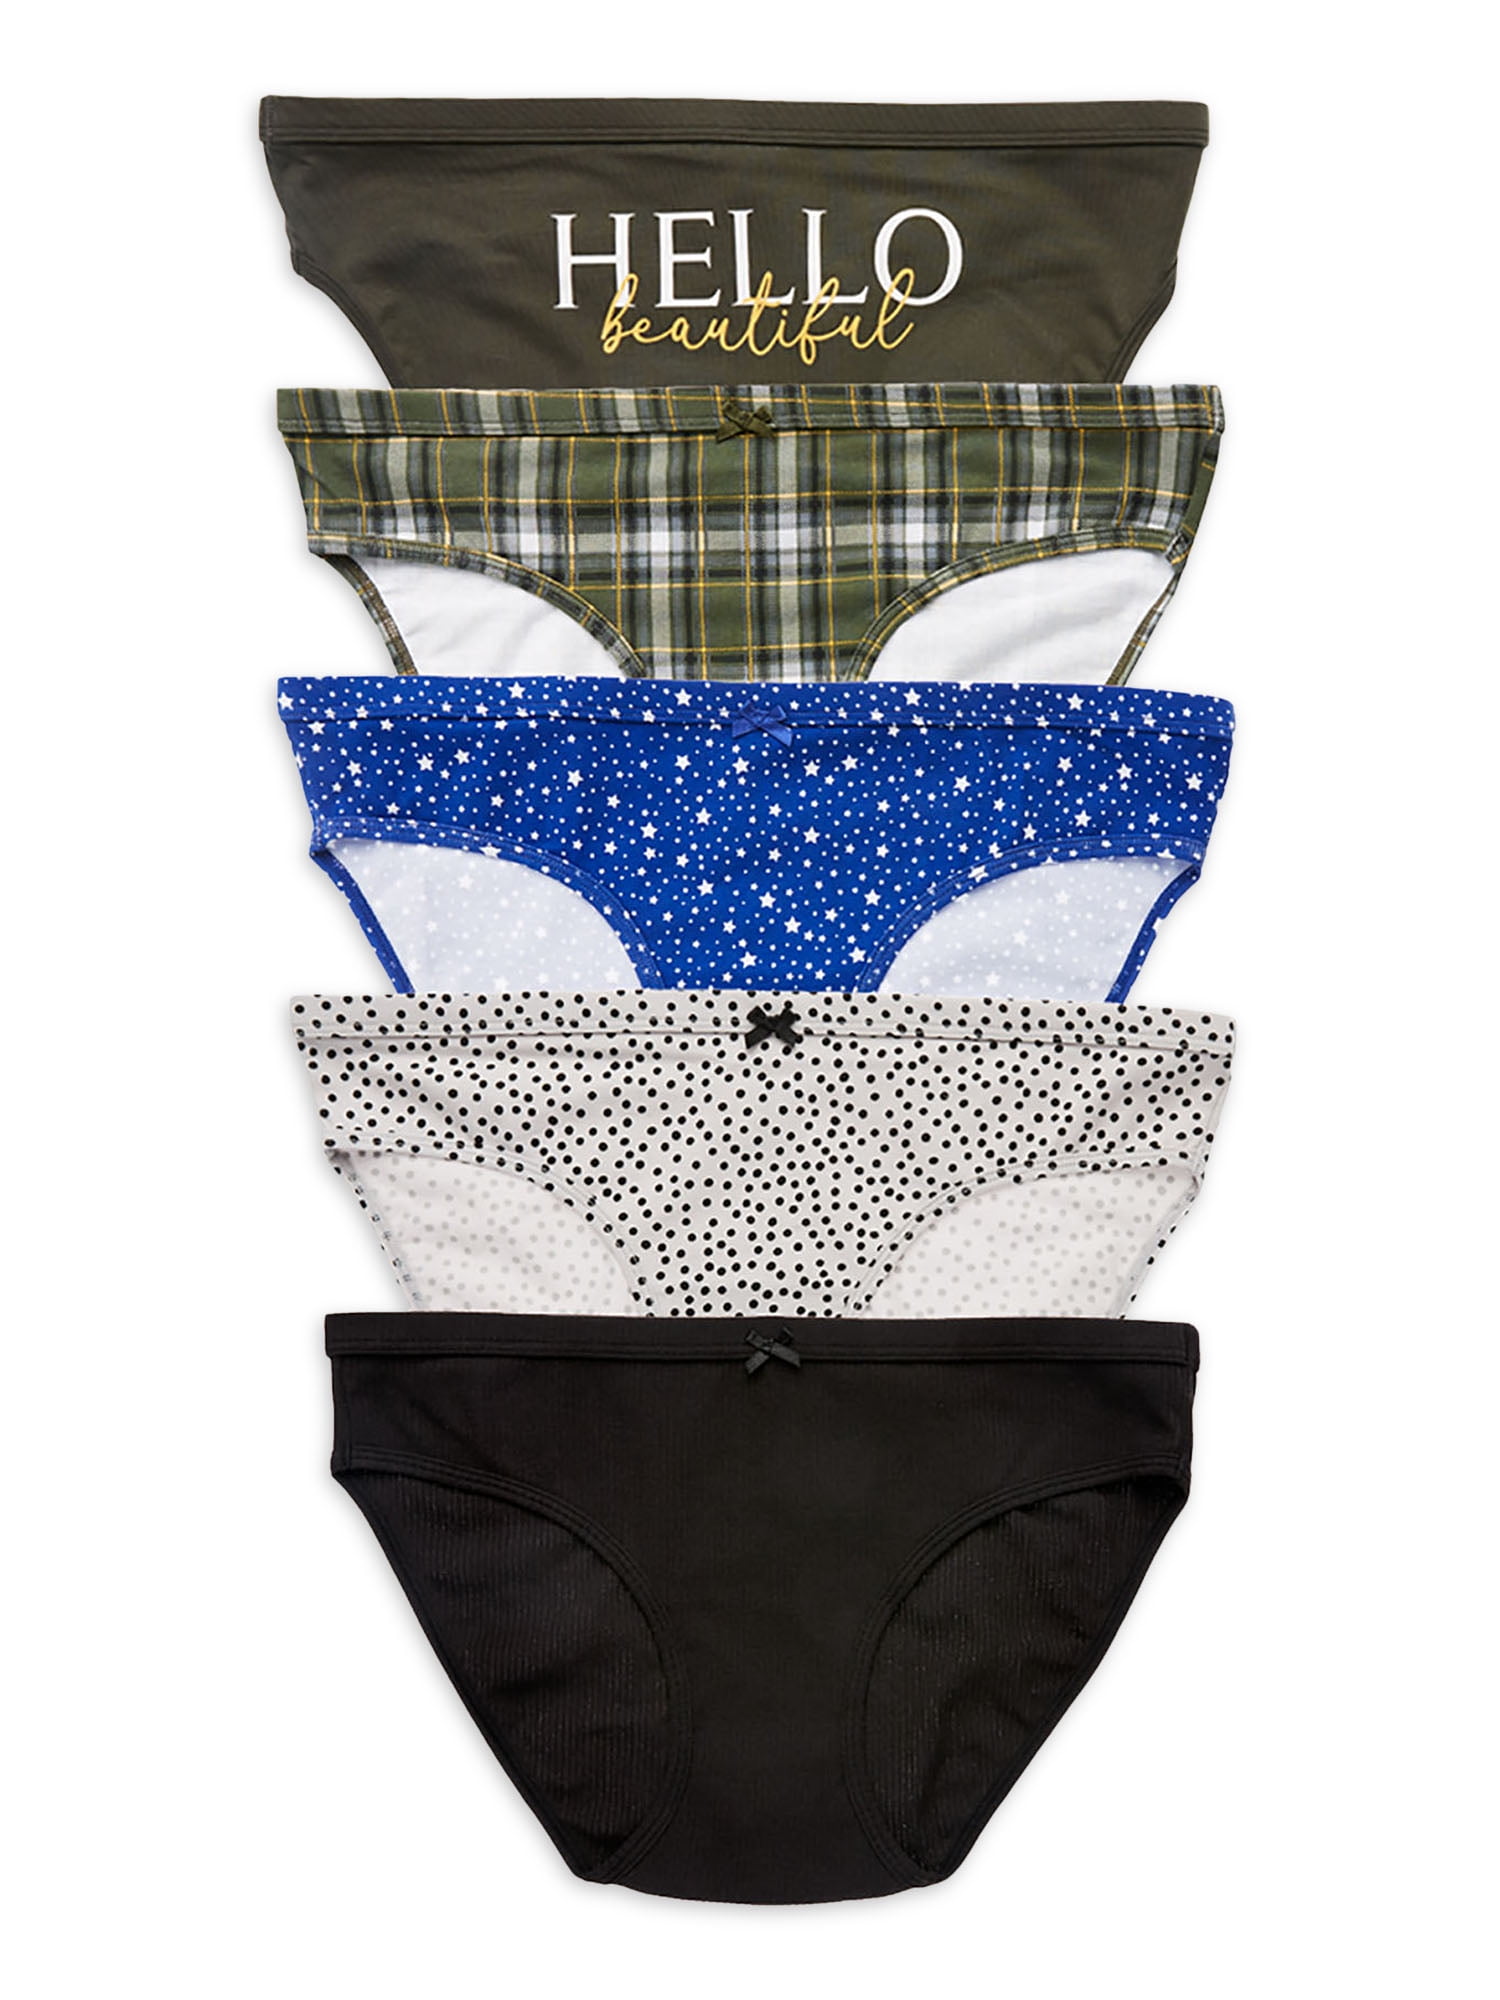 Best of Tumblr panties for sale